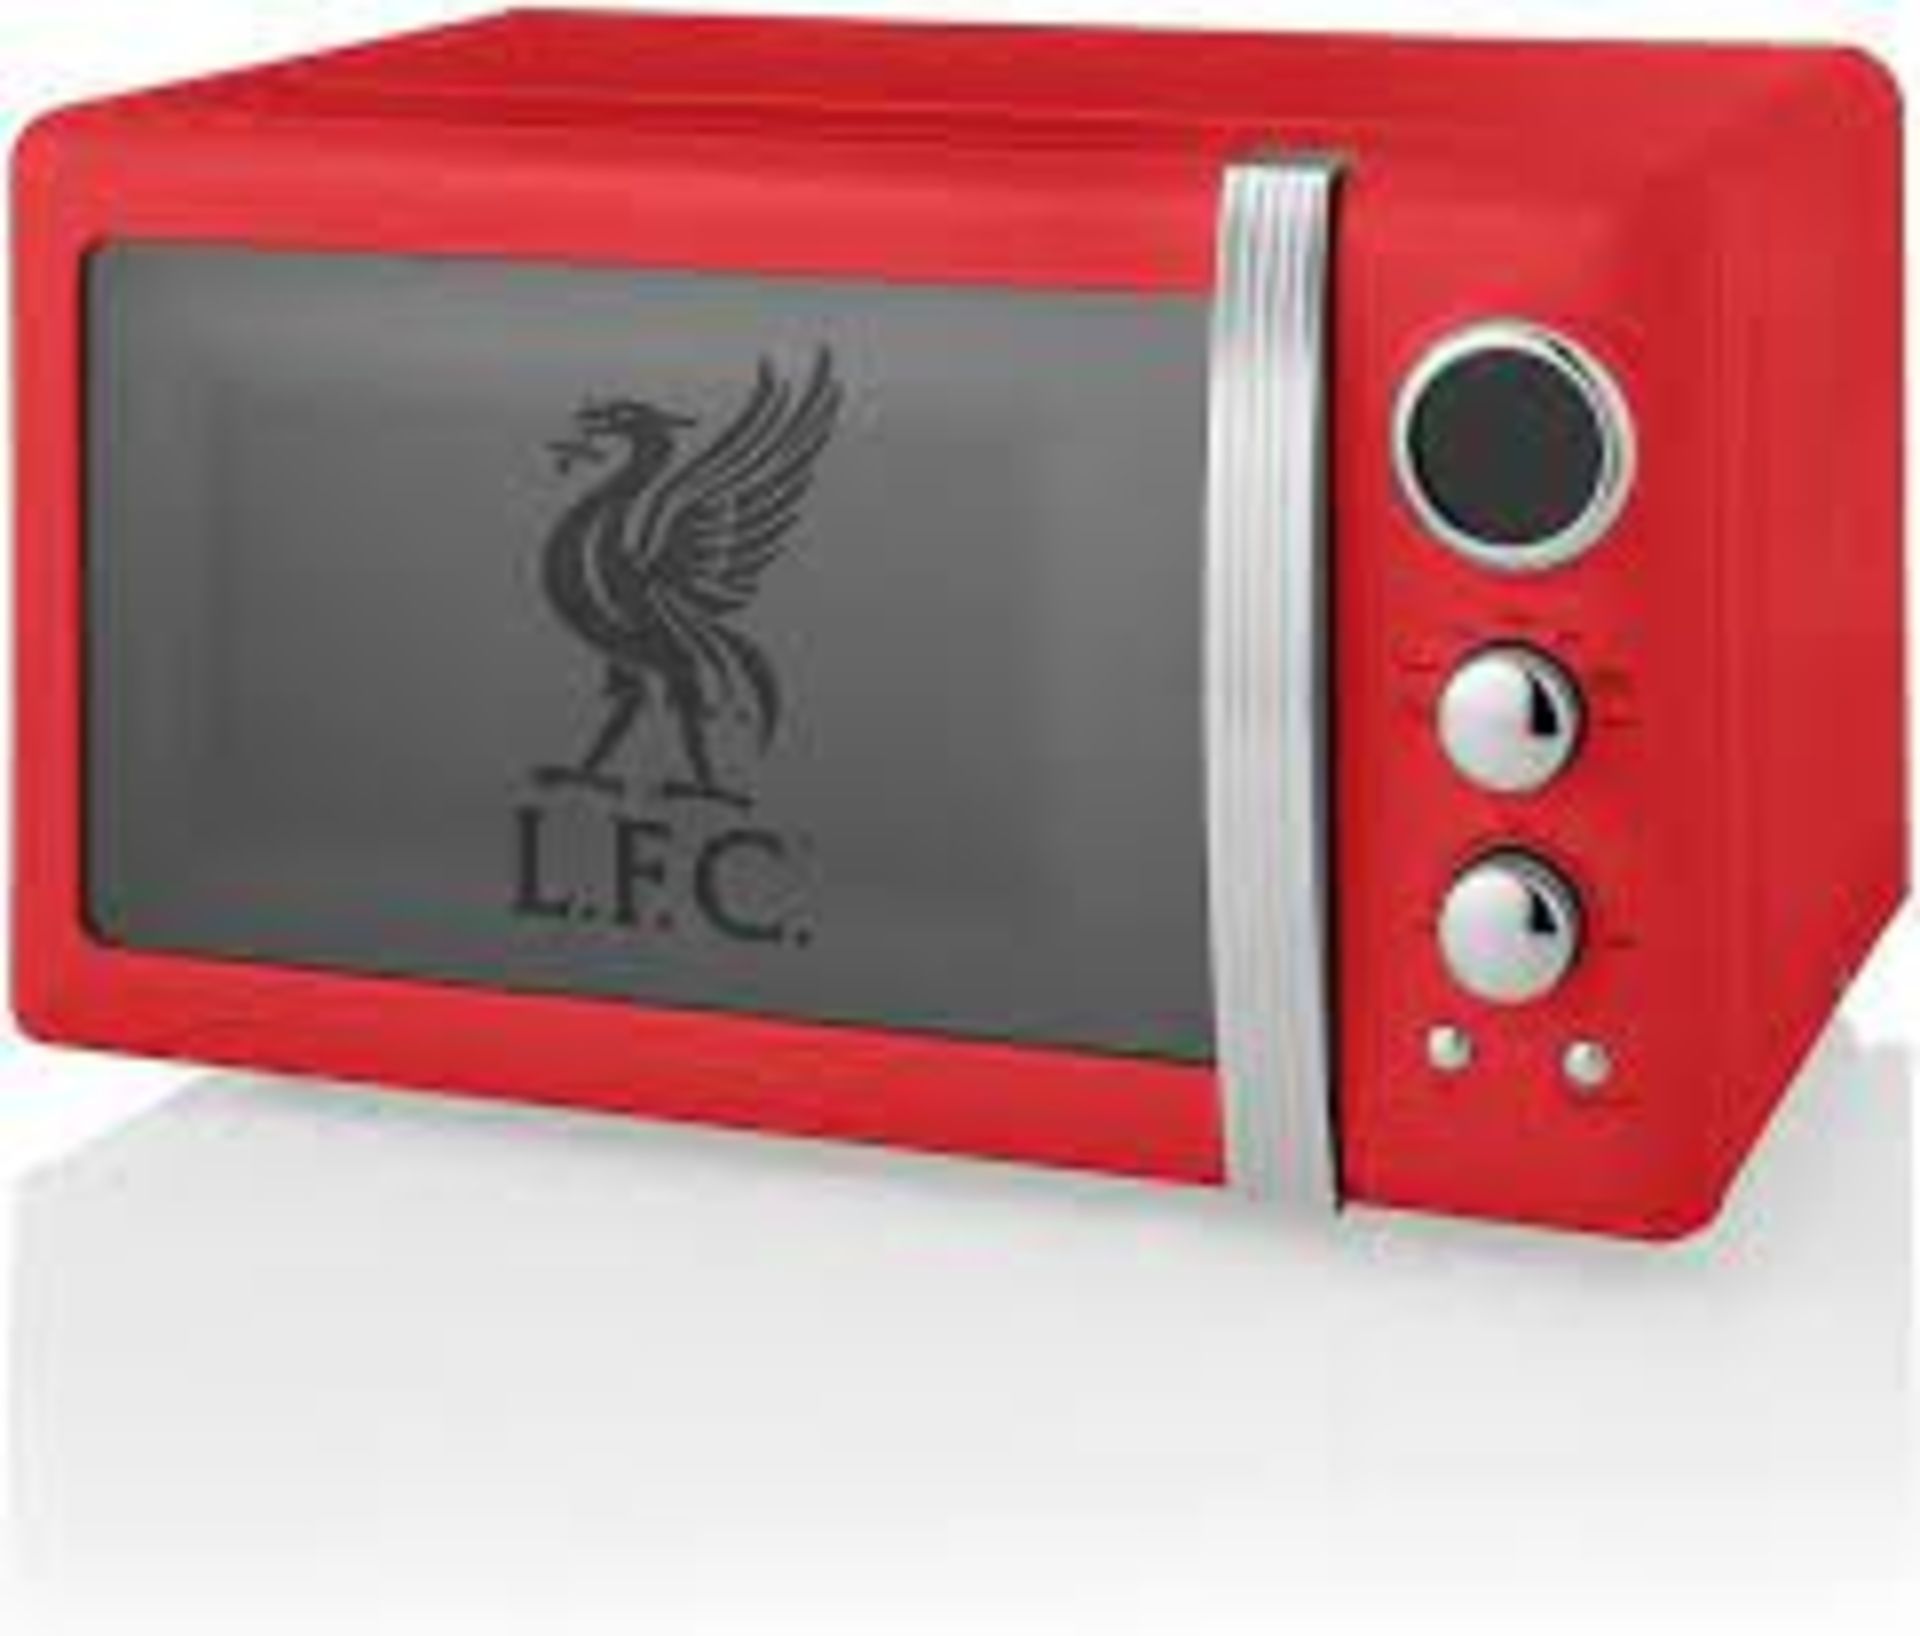 Swan Red Liverpool FC 800W Retro Digital Microwave. - R14.11. The Liverpool FC Microwave is the